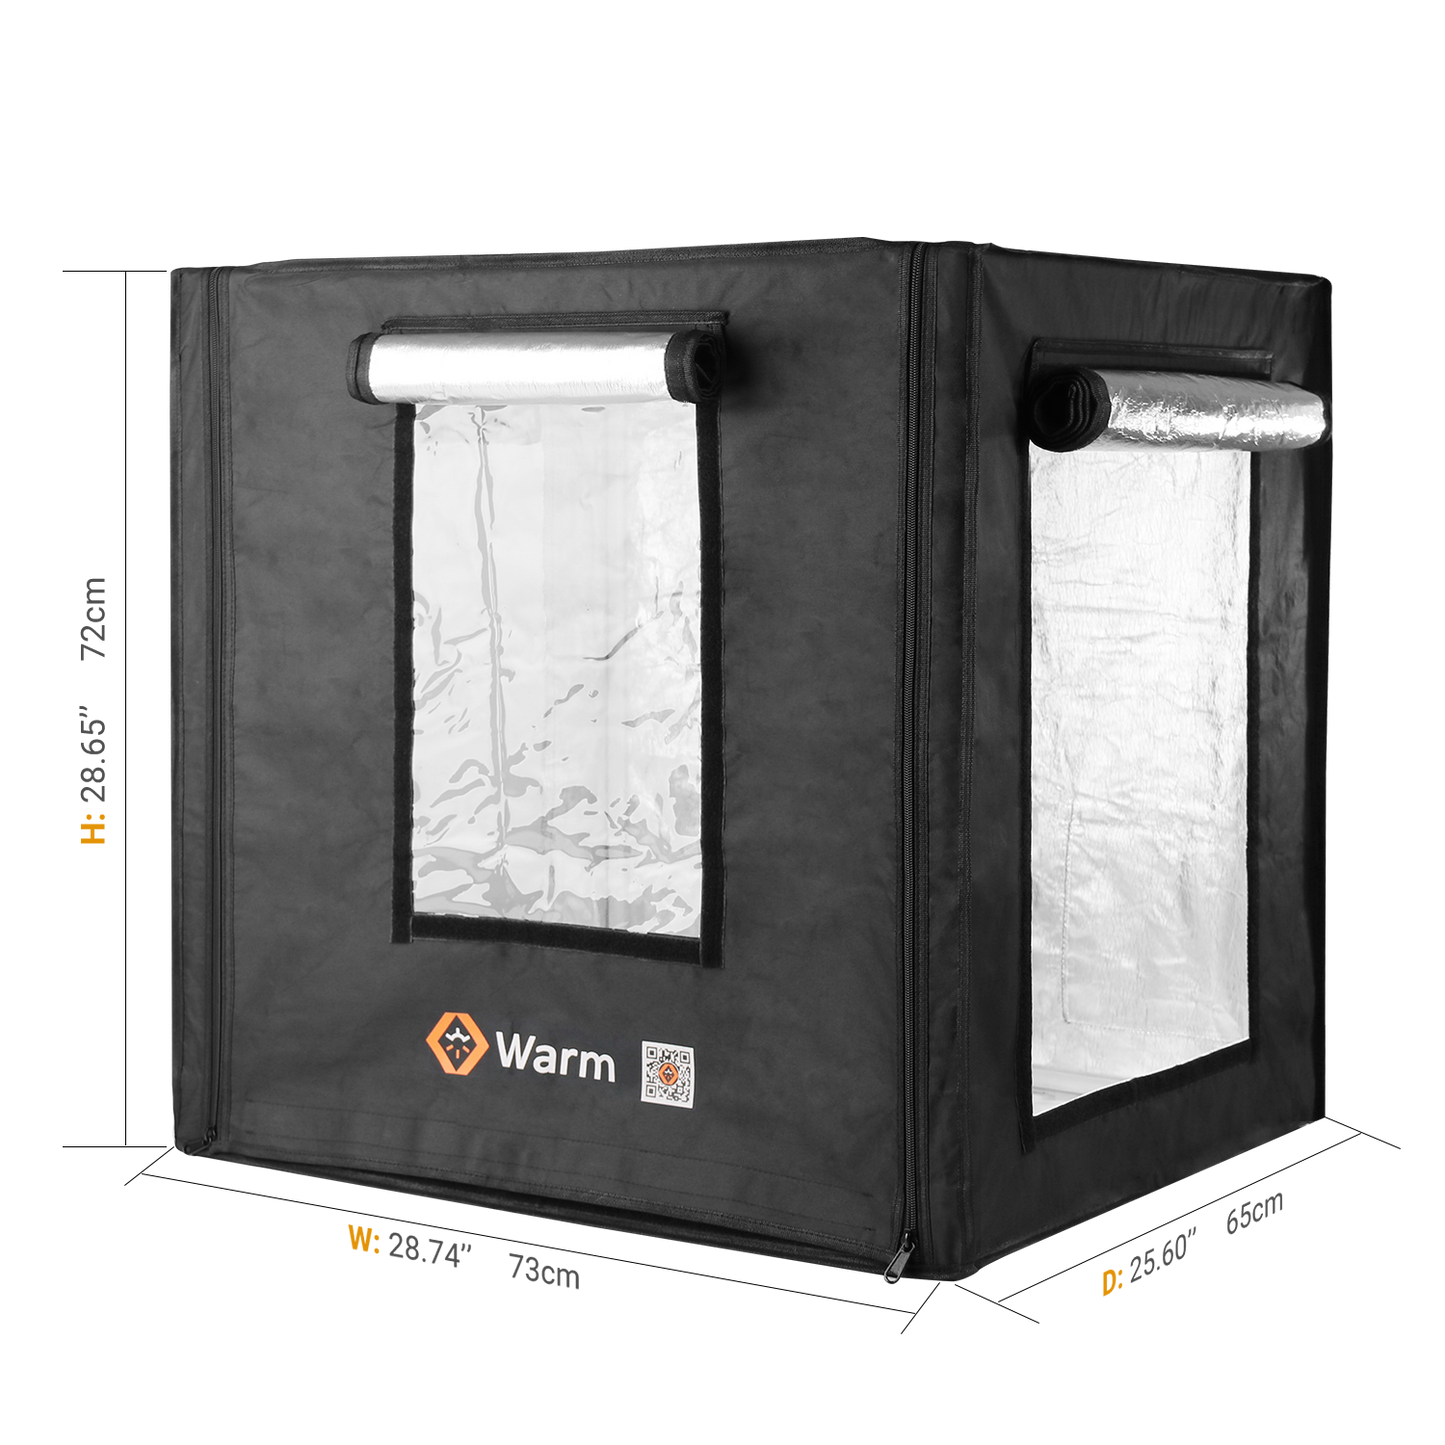 3D Printer Enclosure, Keep Warm, Flame Retardant, Full Coverage, and a Studio, Warm Pro